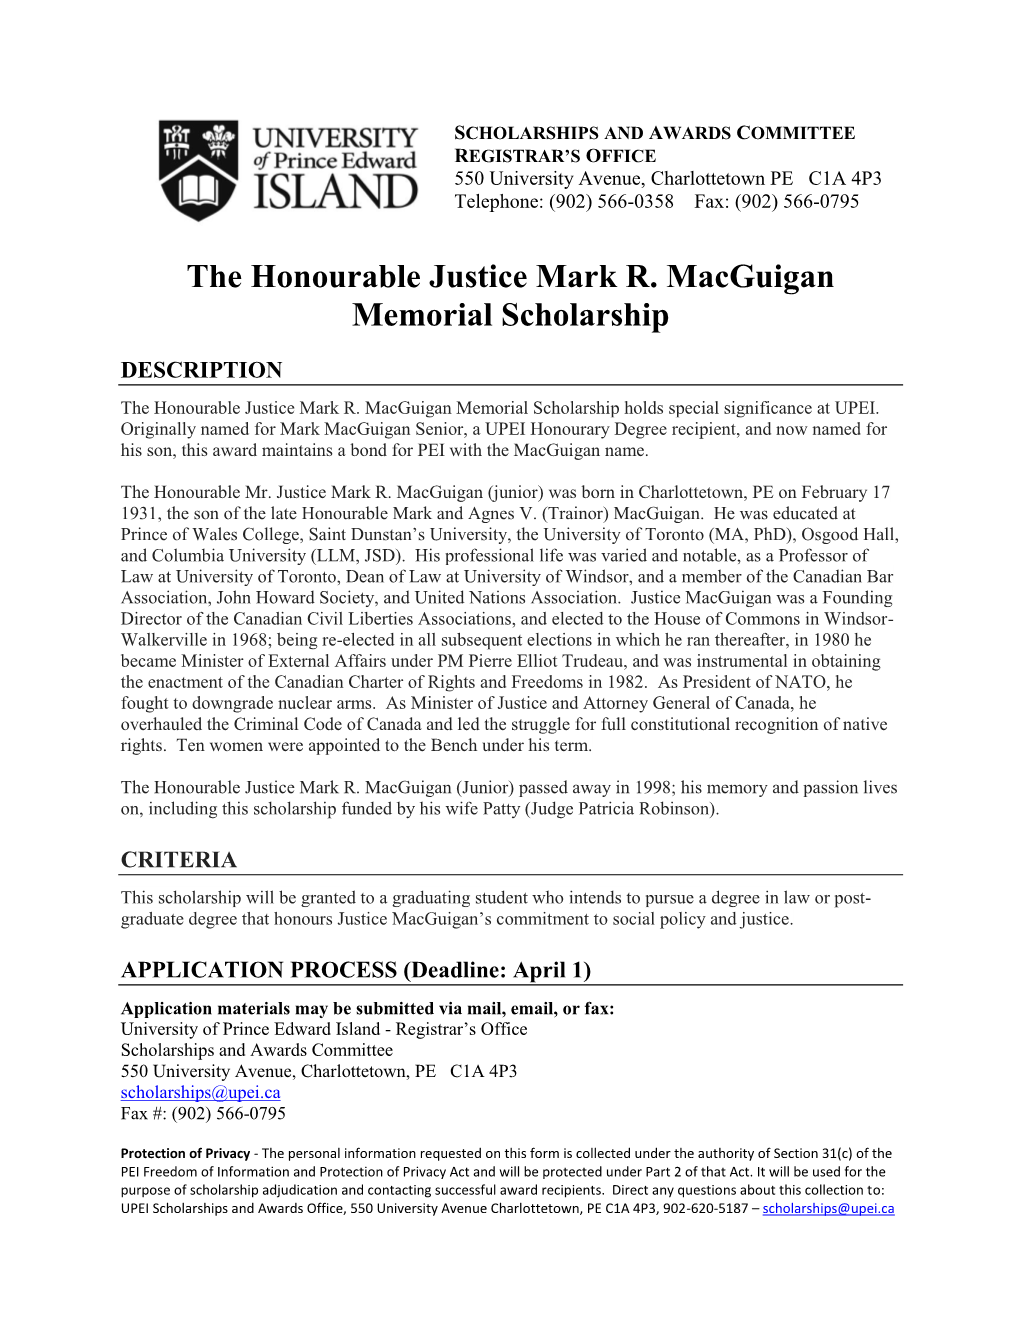 The Honourable Justice Mark R. Macguigan Memorial Scholarship